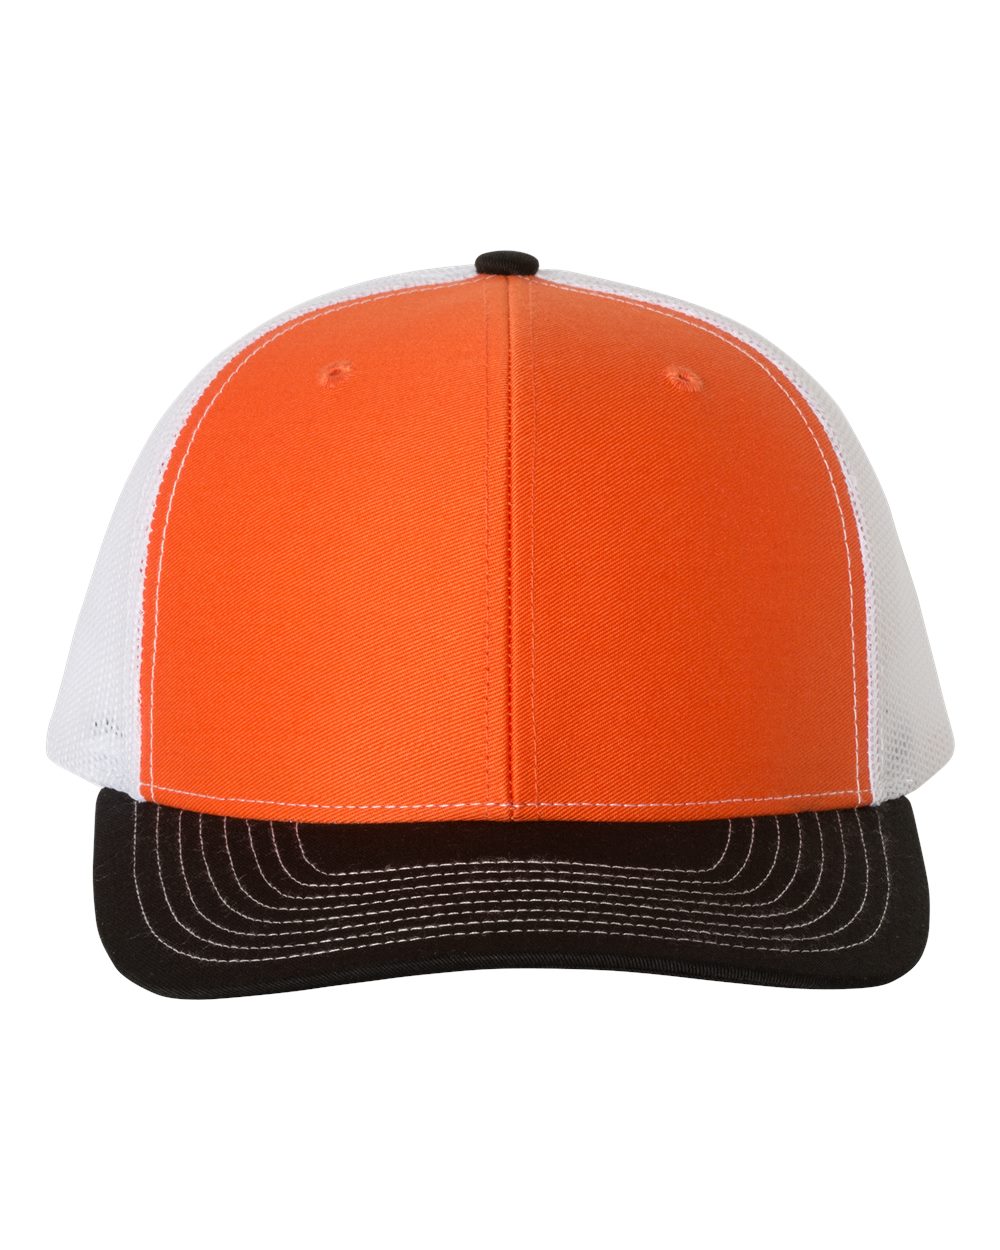 Richardson Snapback Trucker Hat (112) in Orange/White/Black